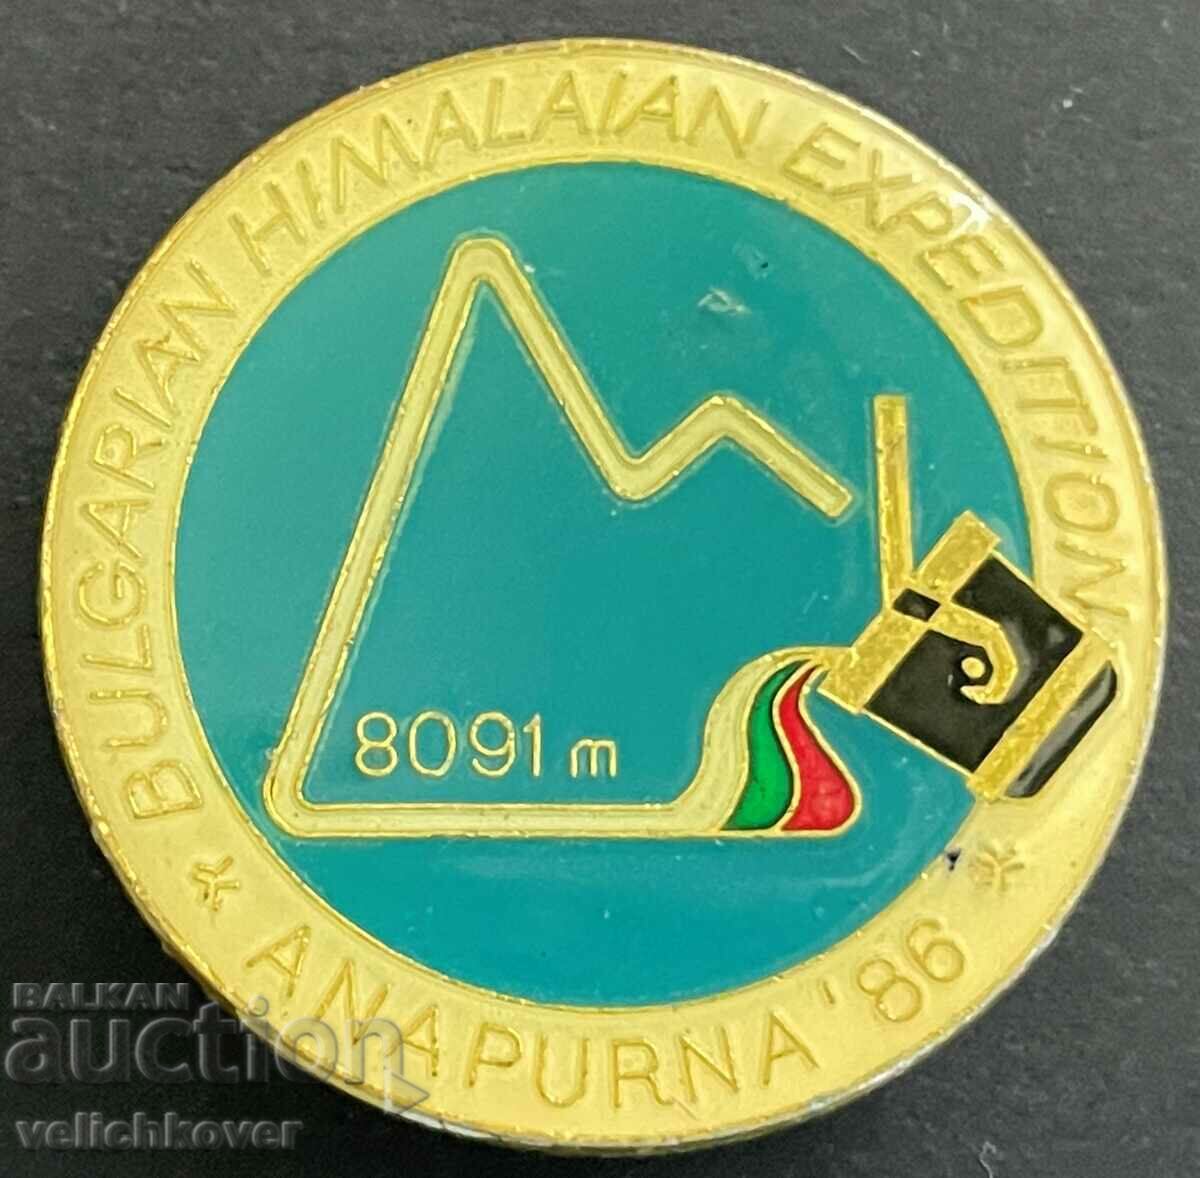 33830 Bulgaria Annapurna Himalaya ορειβατικής αποστολής πινακίδα